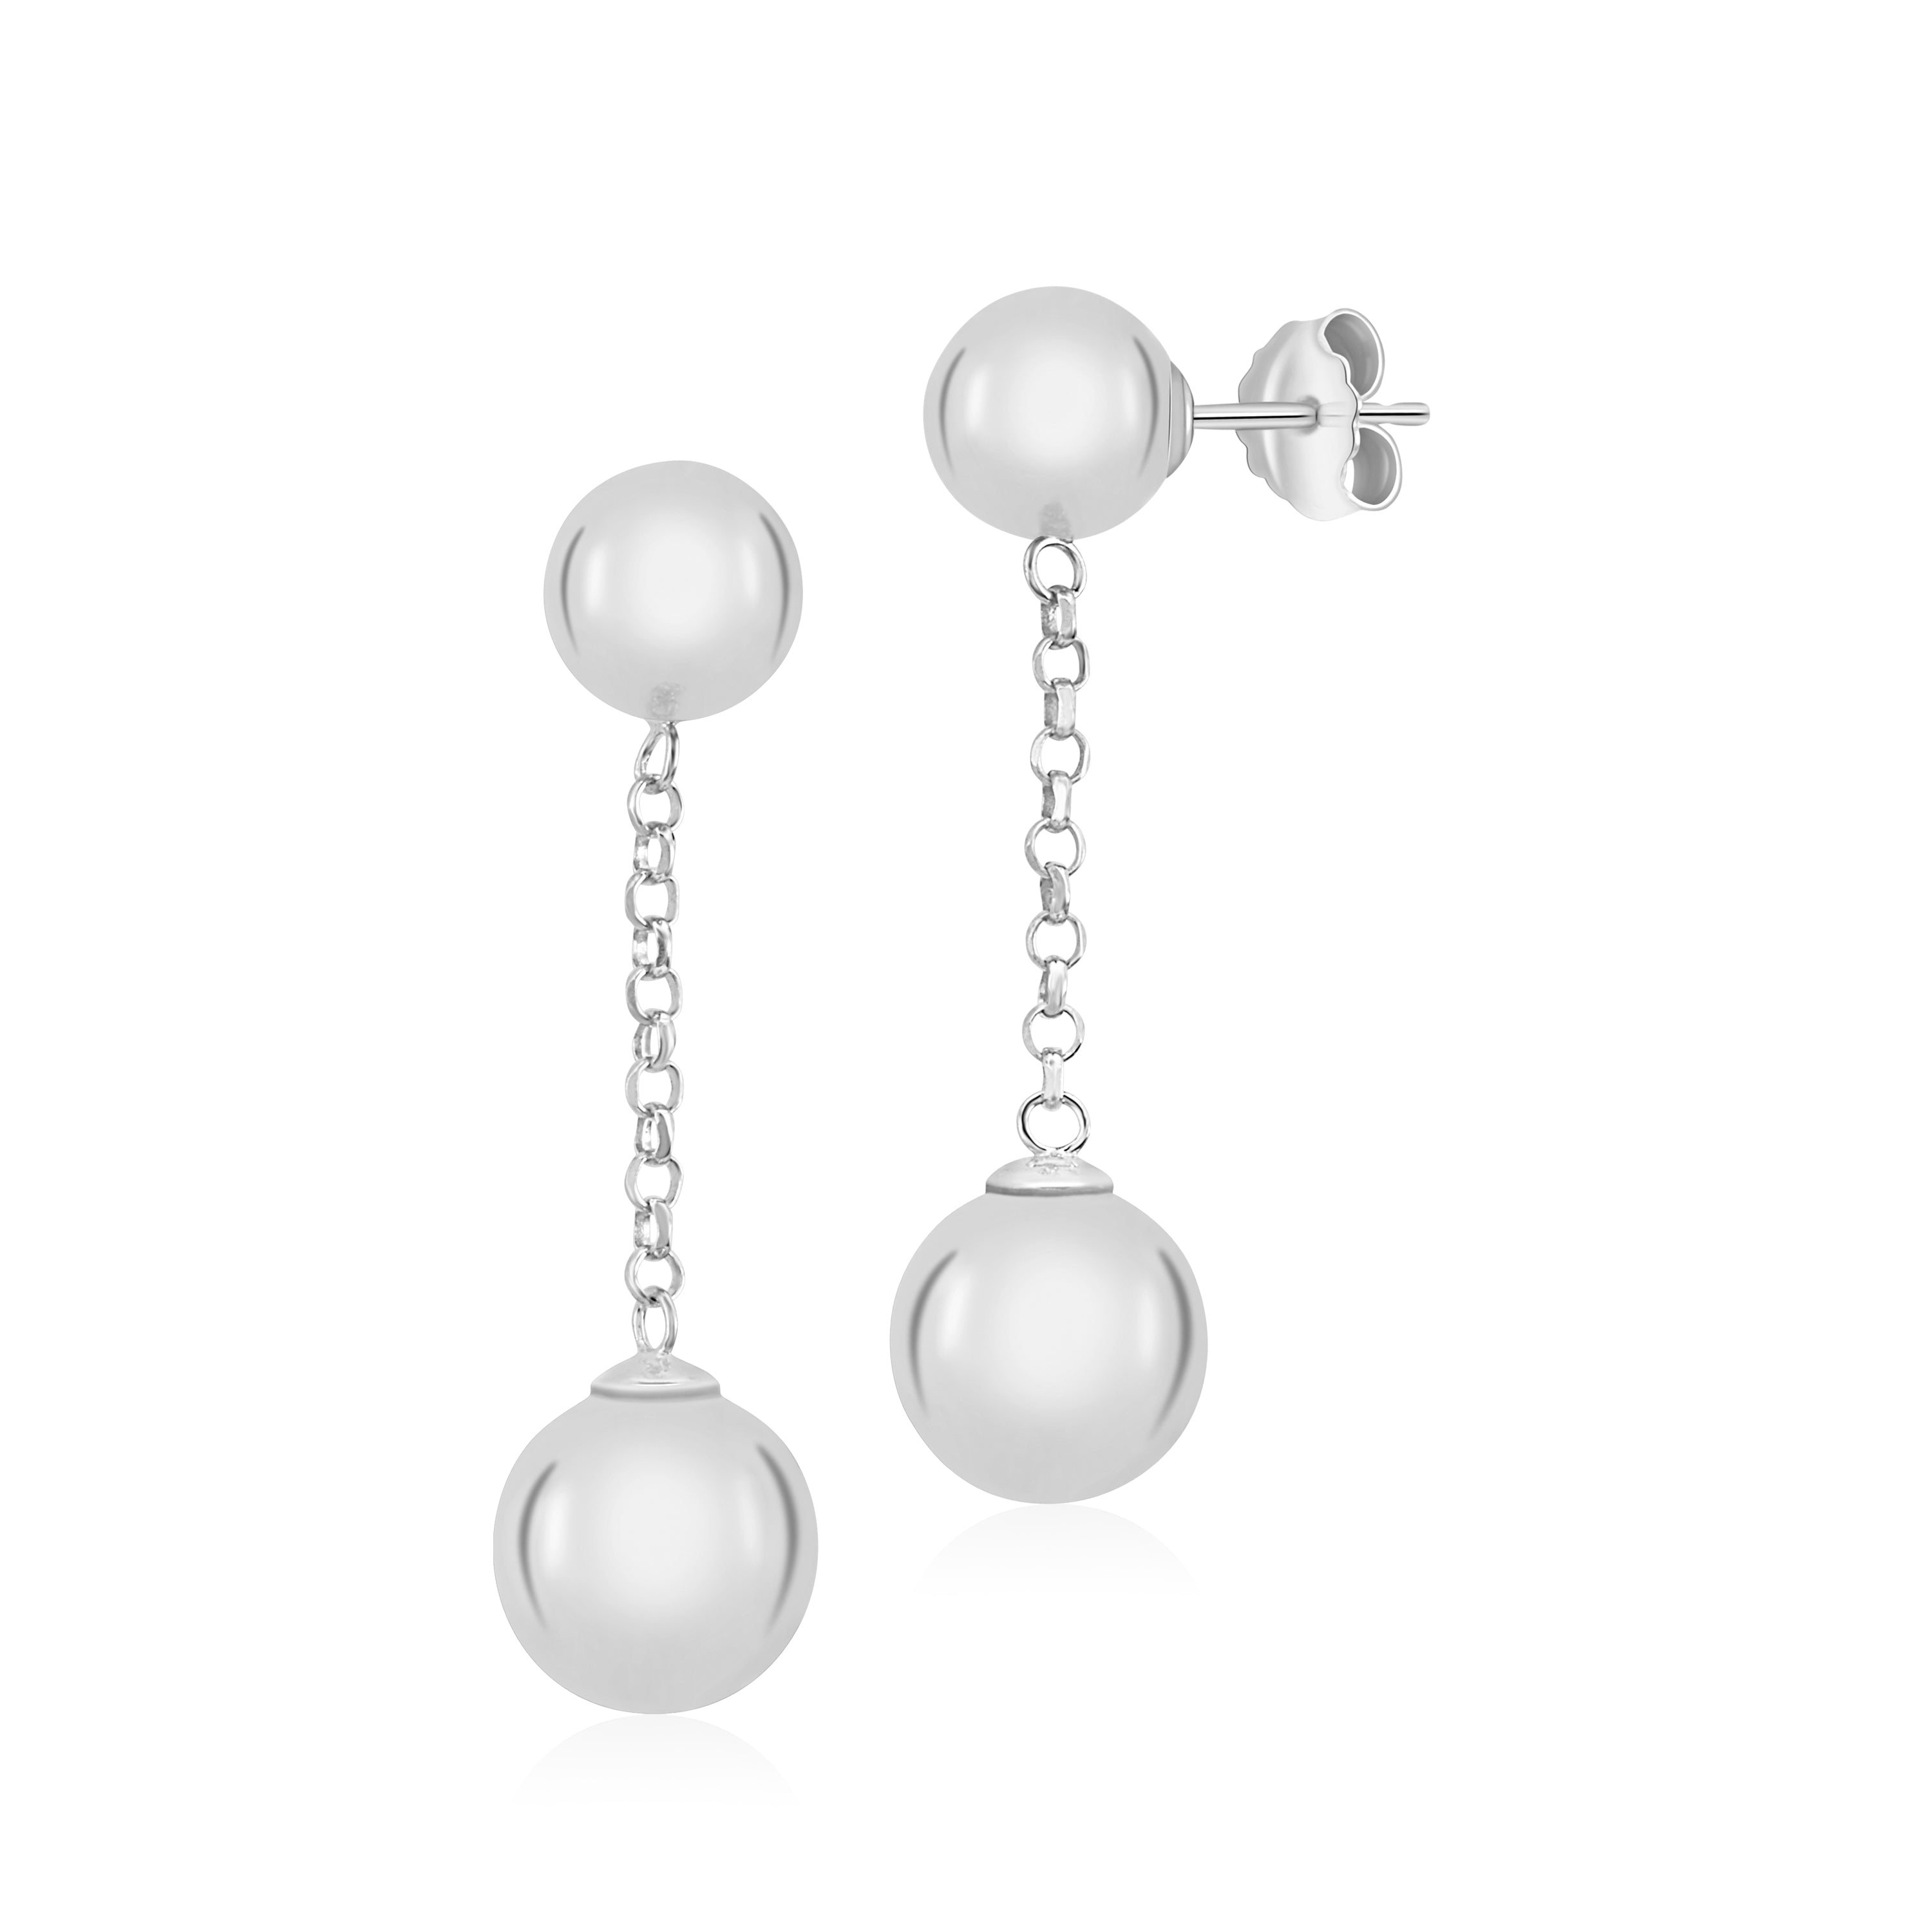 Sterling Silver 925 Polished Double Ball Drop Earrings | Massete ...